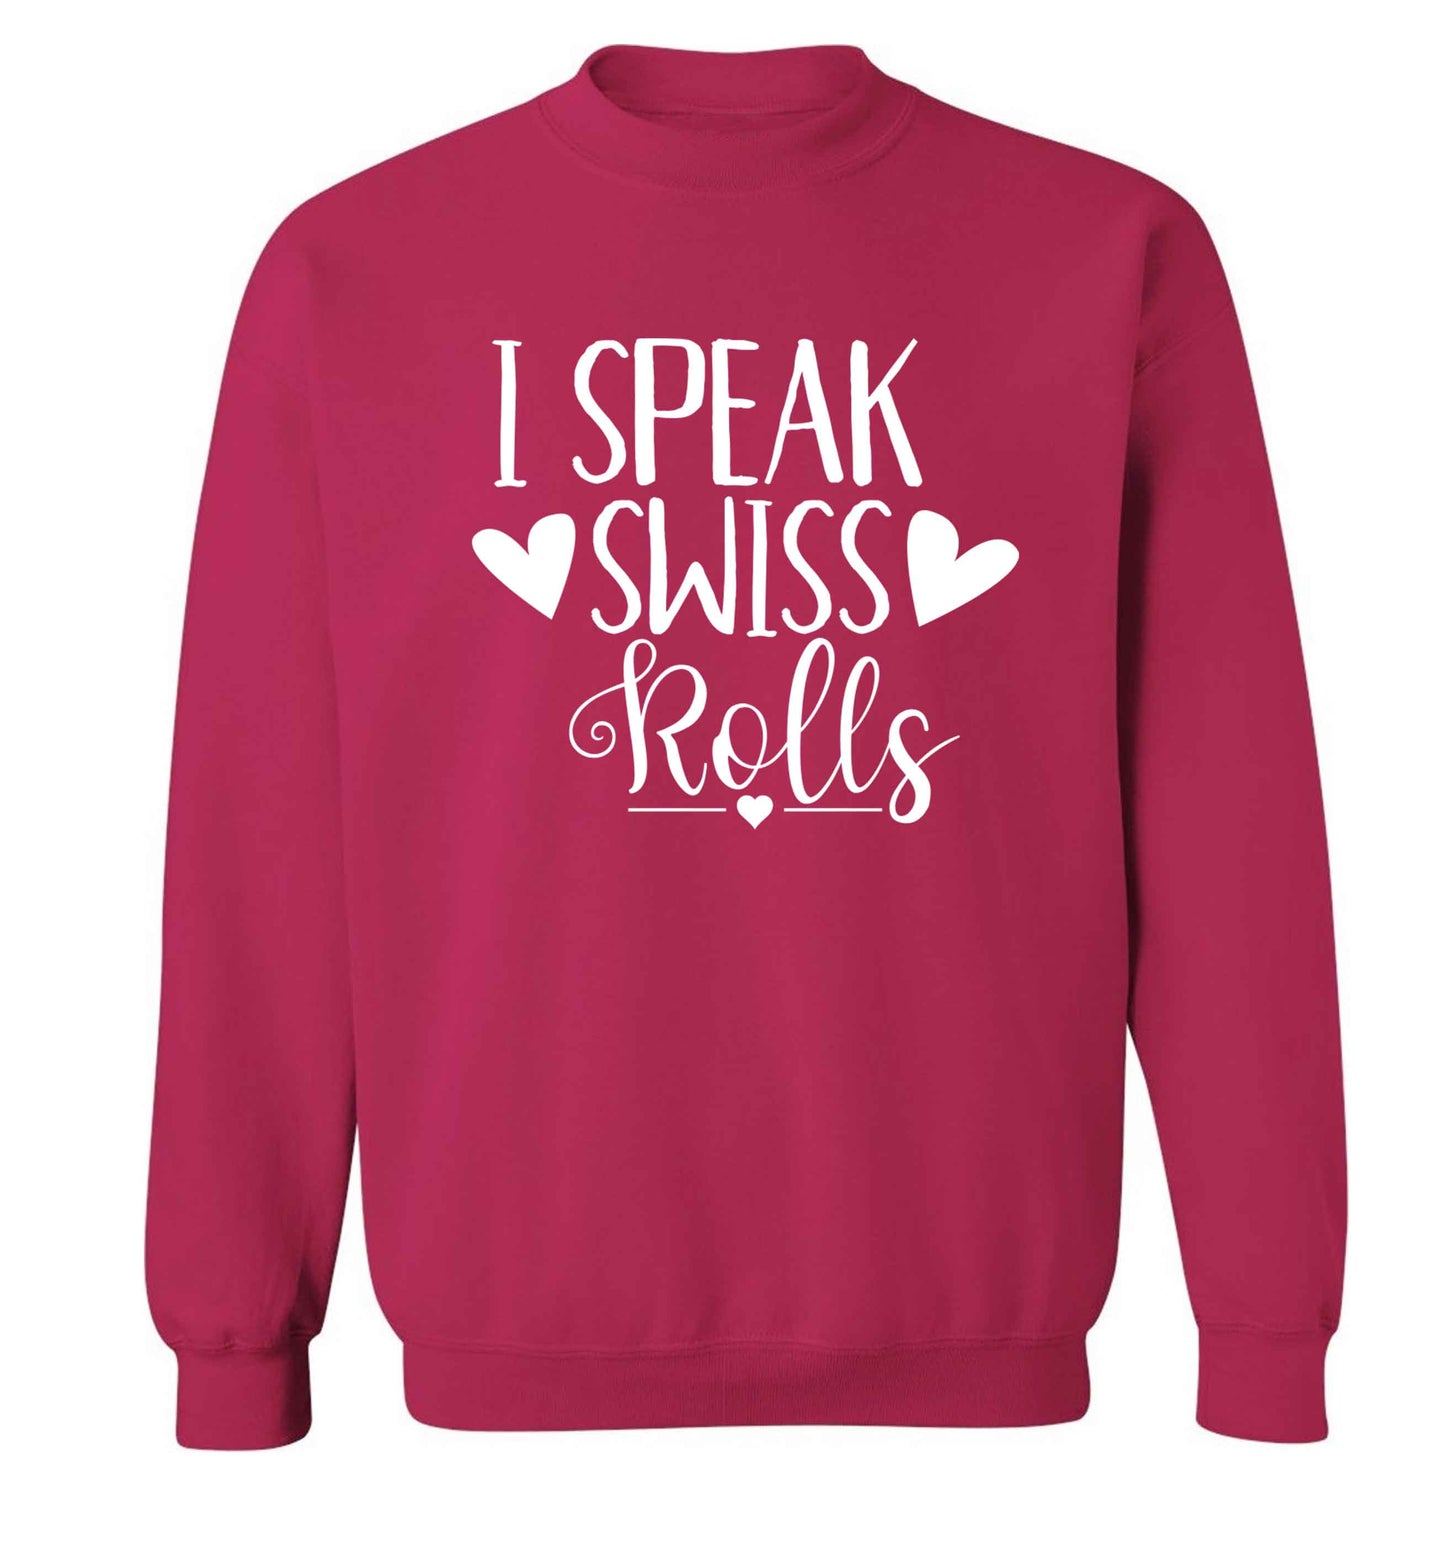 I speak swiss..rolls Adult's unisex pink Sweater 2XL